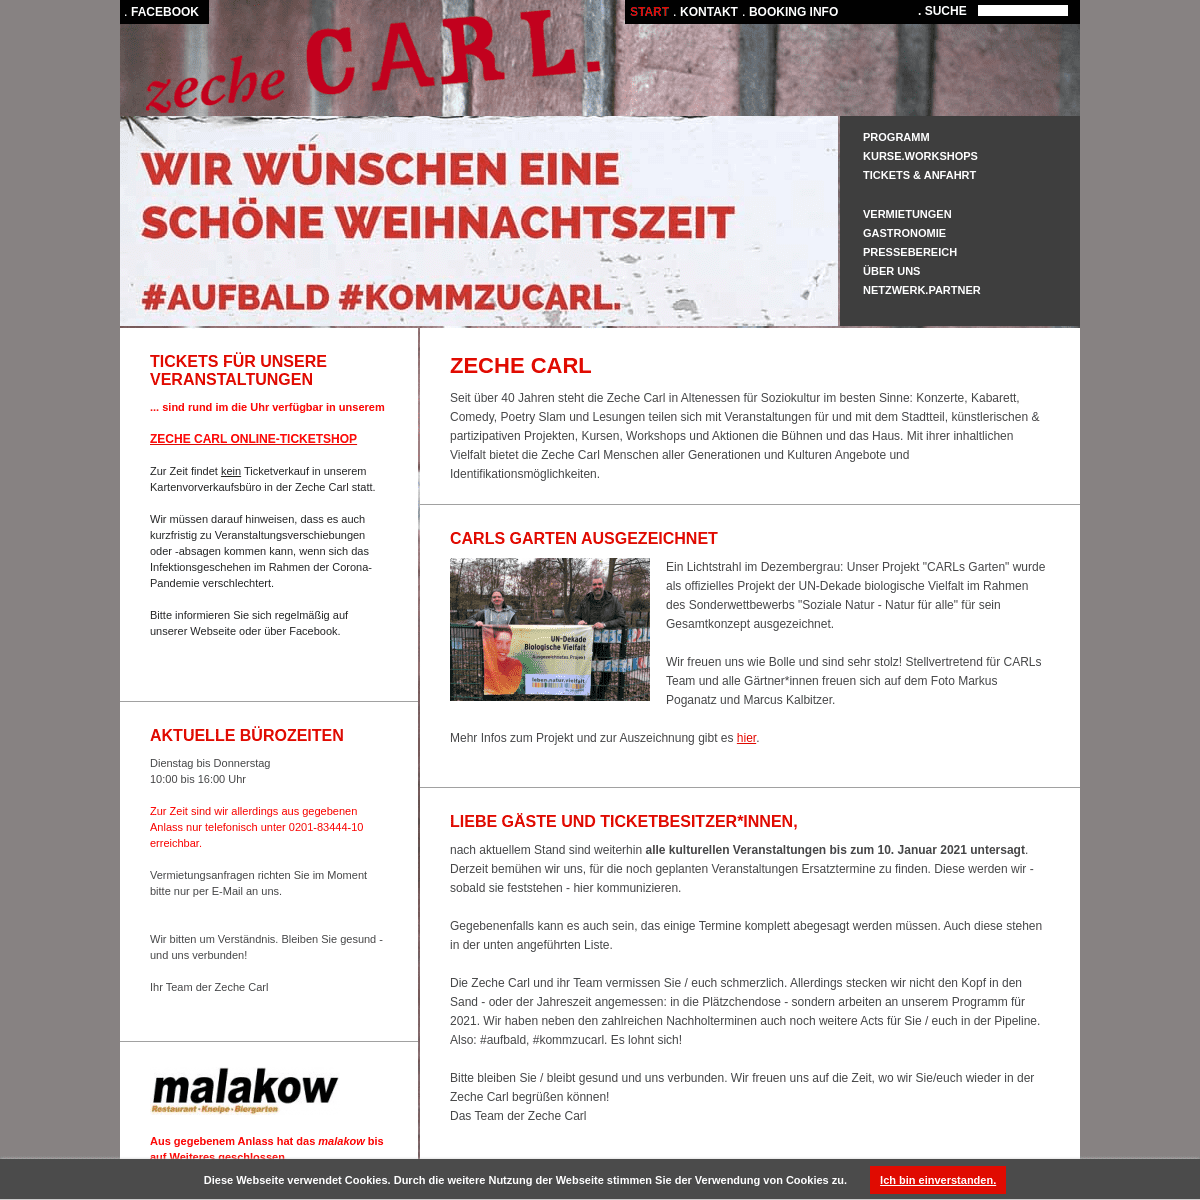 A complete backup of zechecarl.de